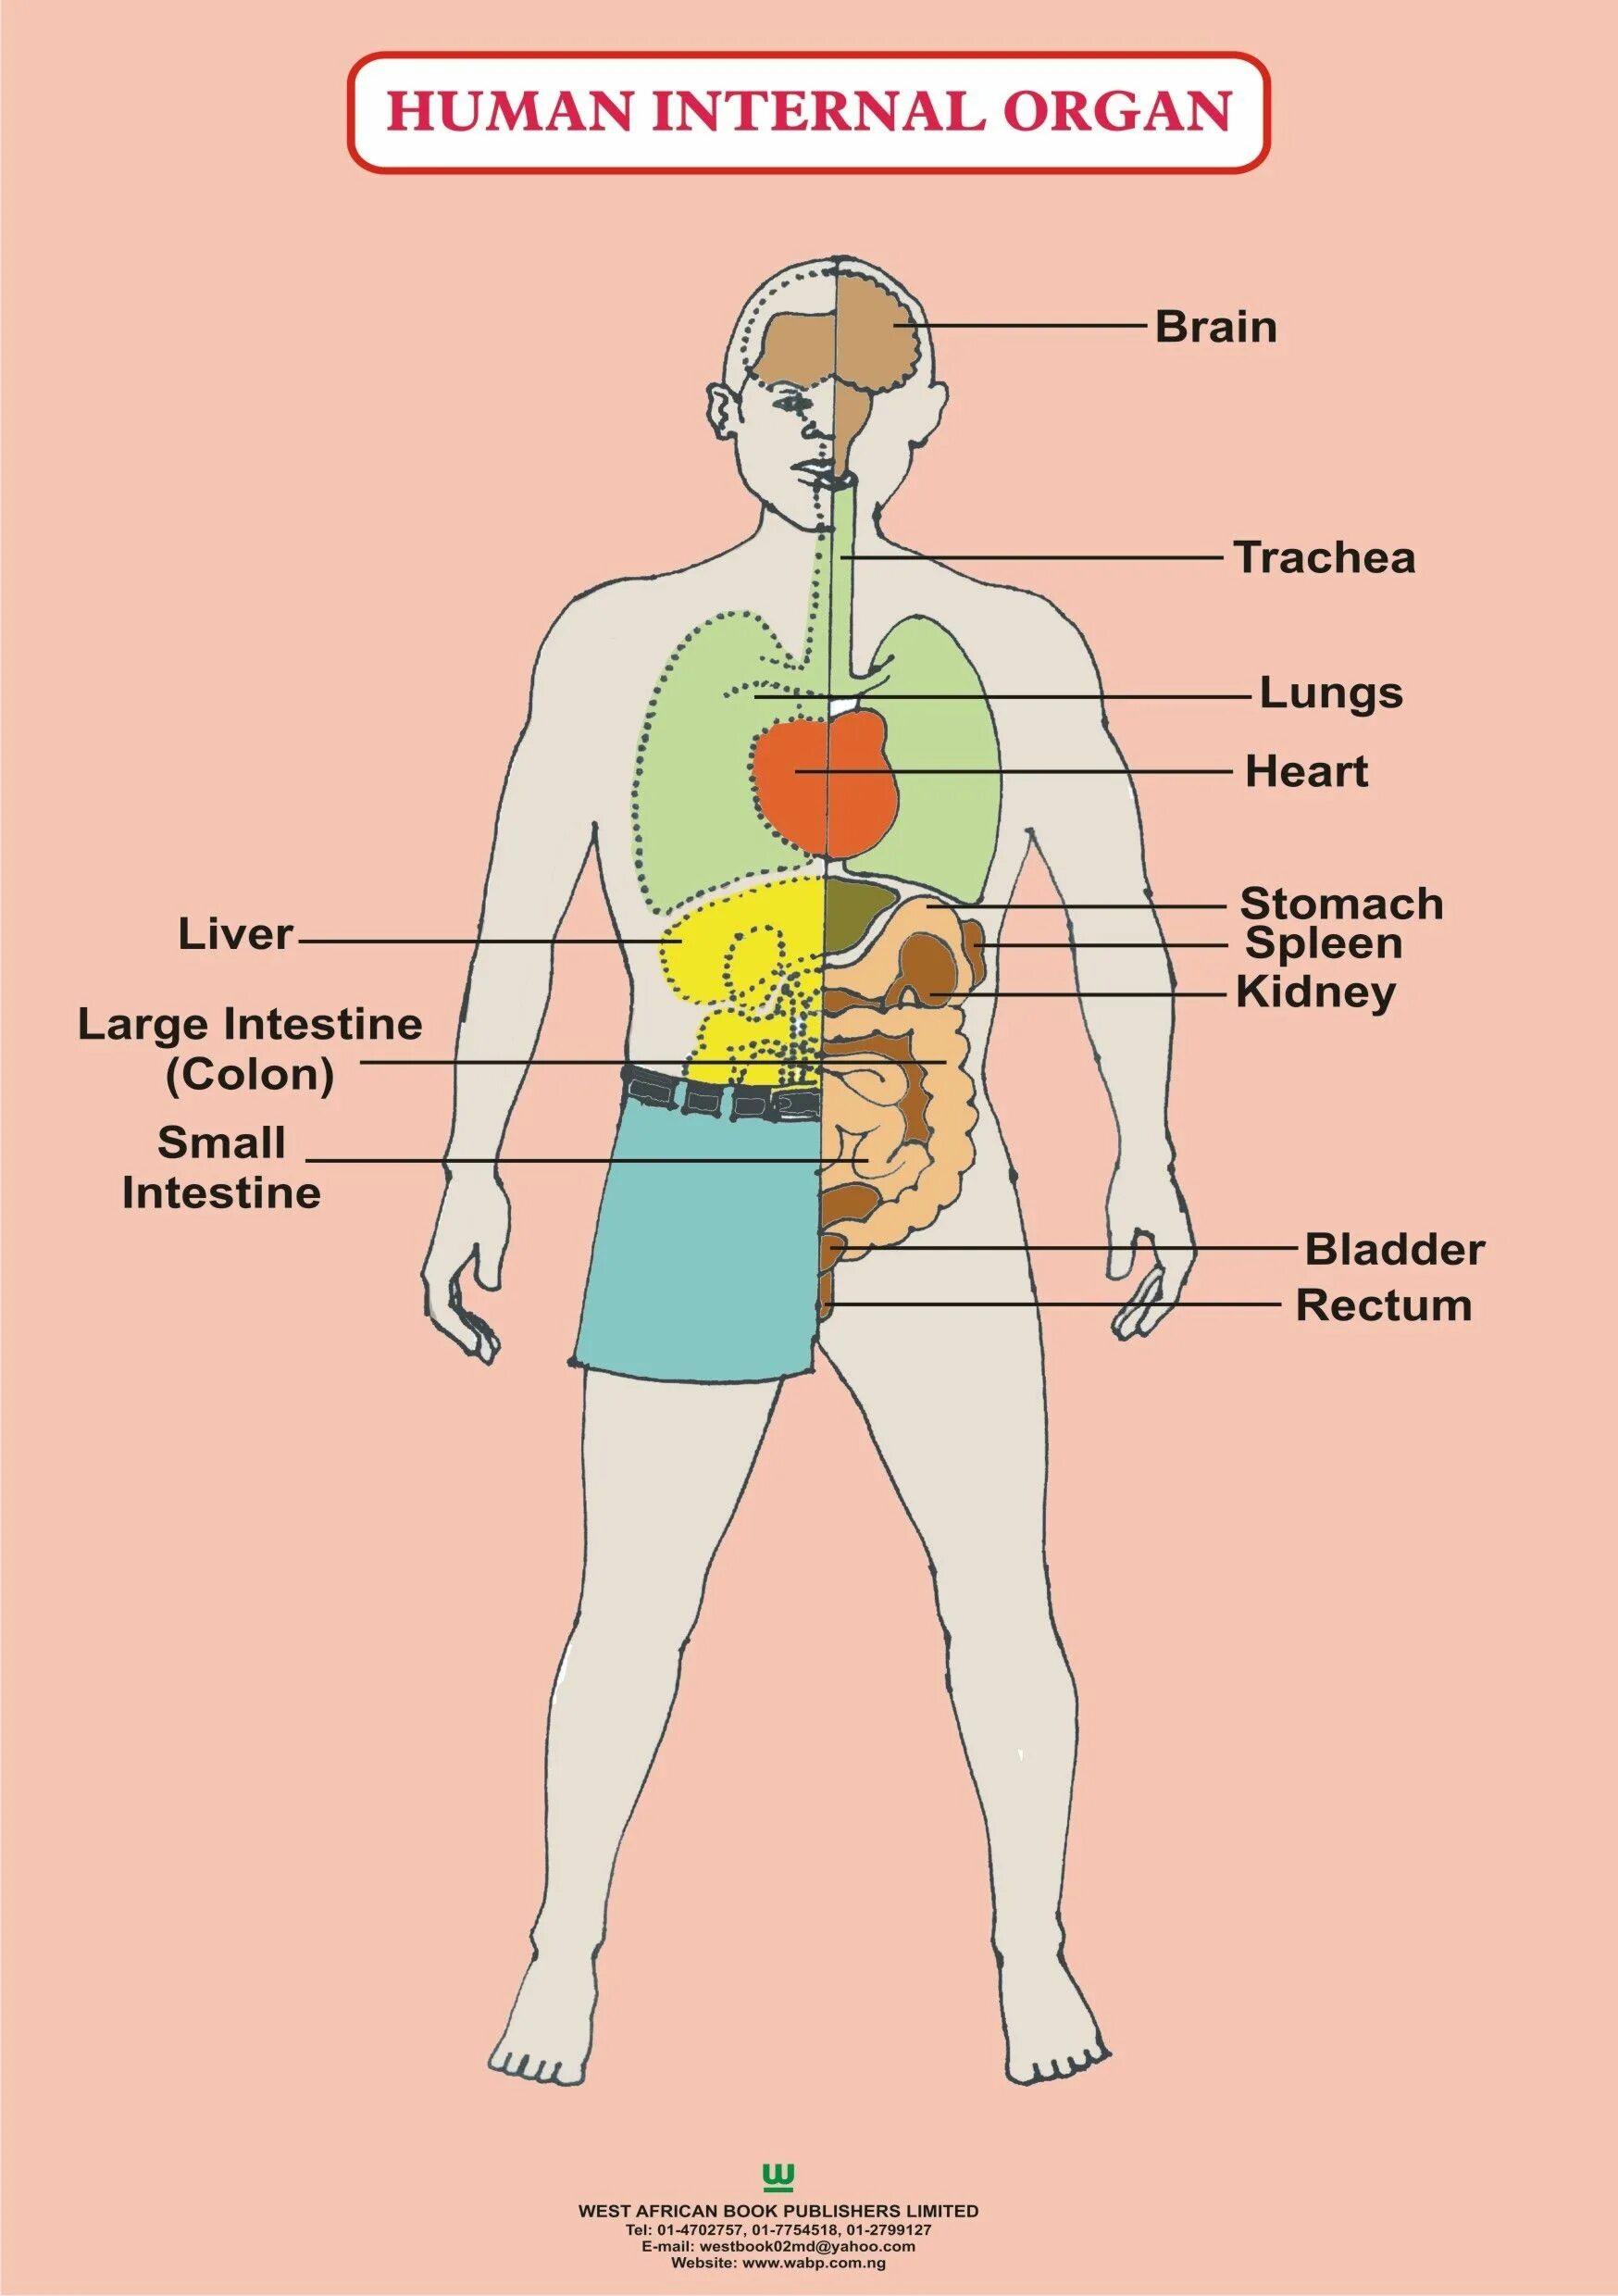 Human organs. Органы человека. Internal Organs of the Human body.